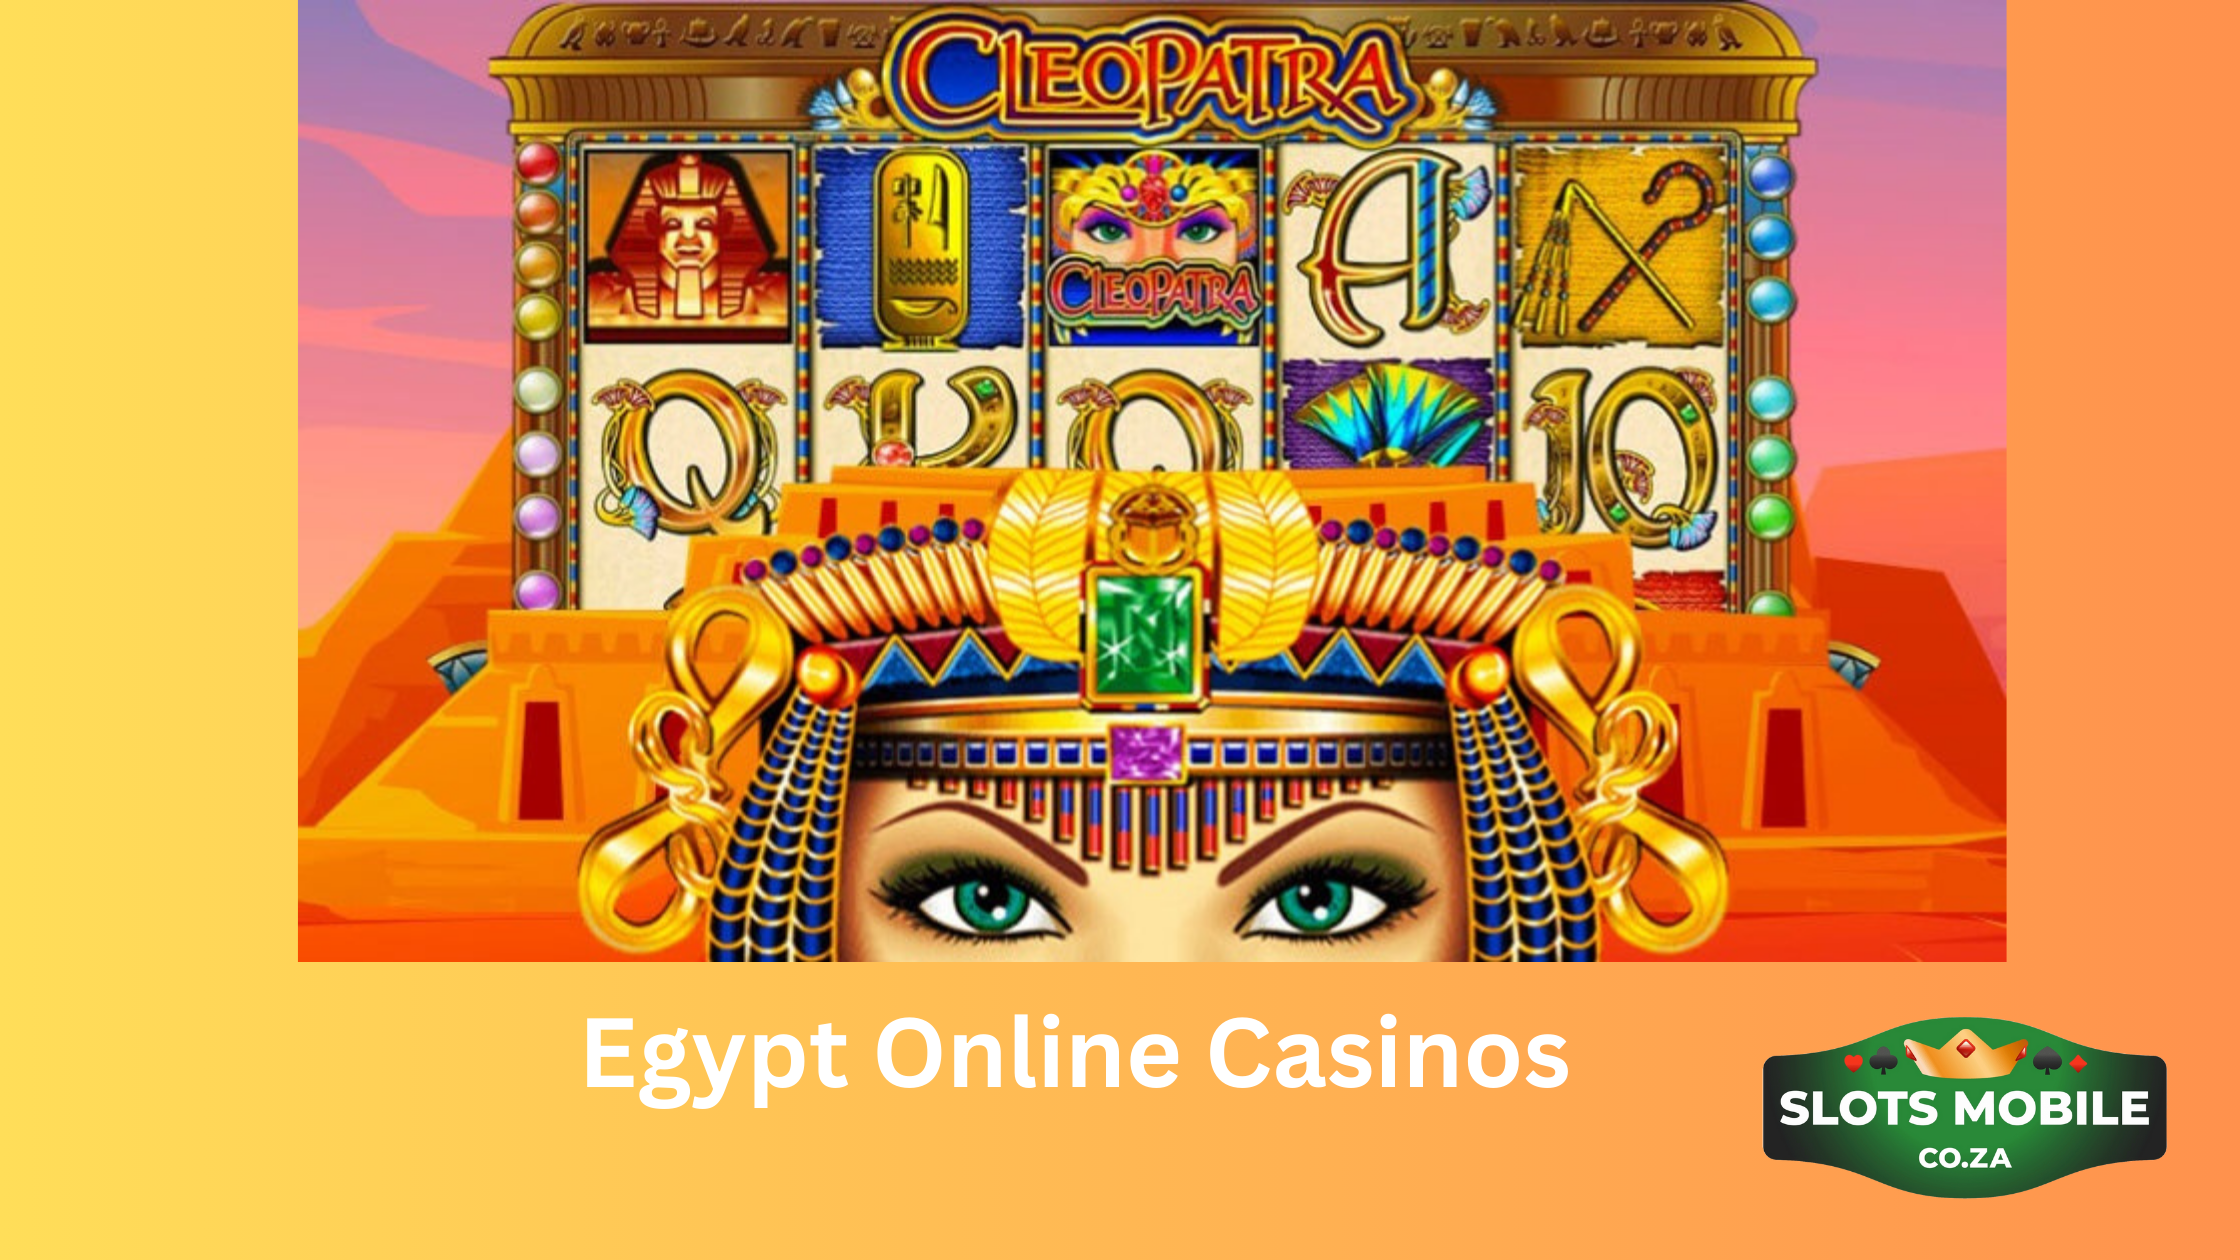 Egypt Online Casinos